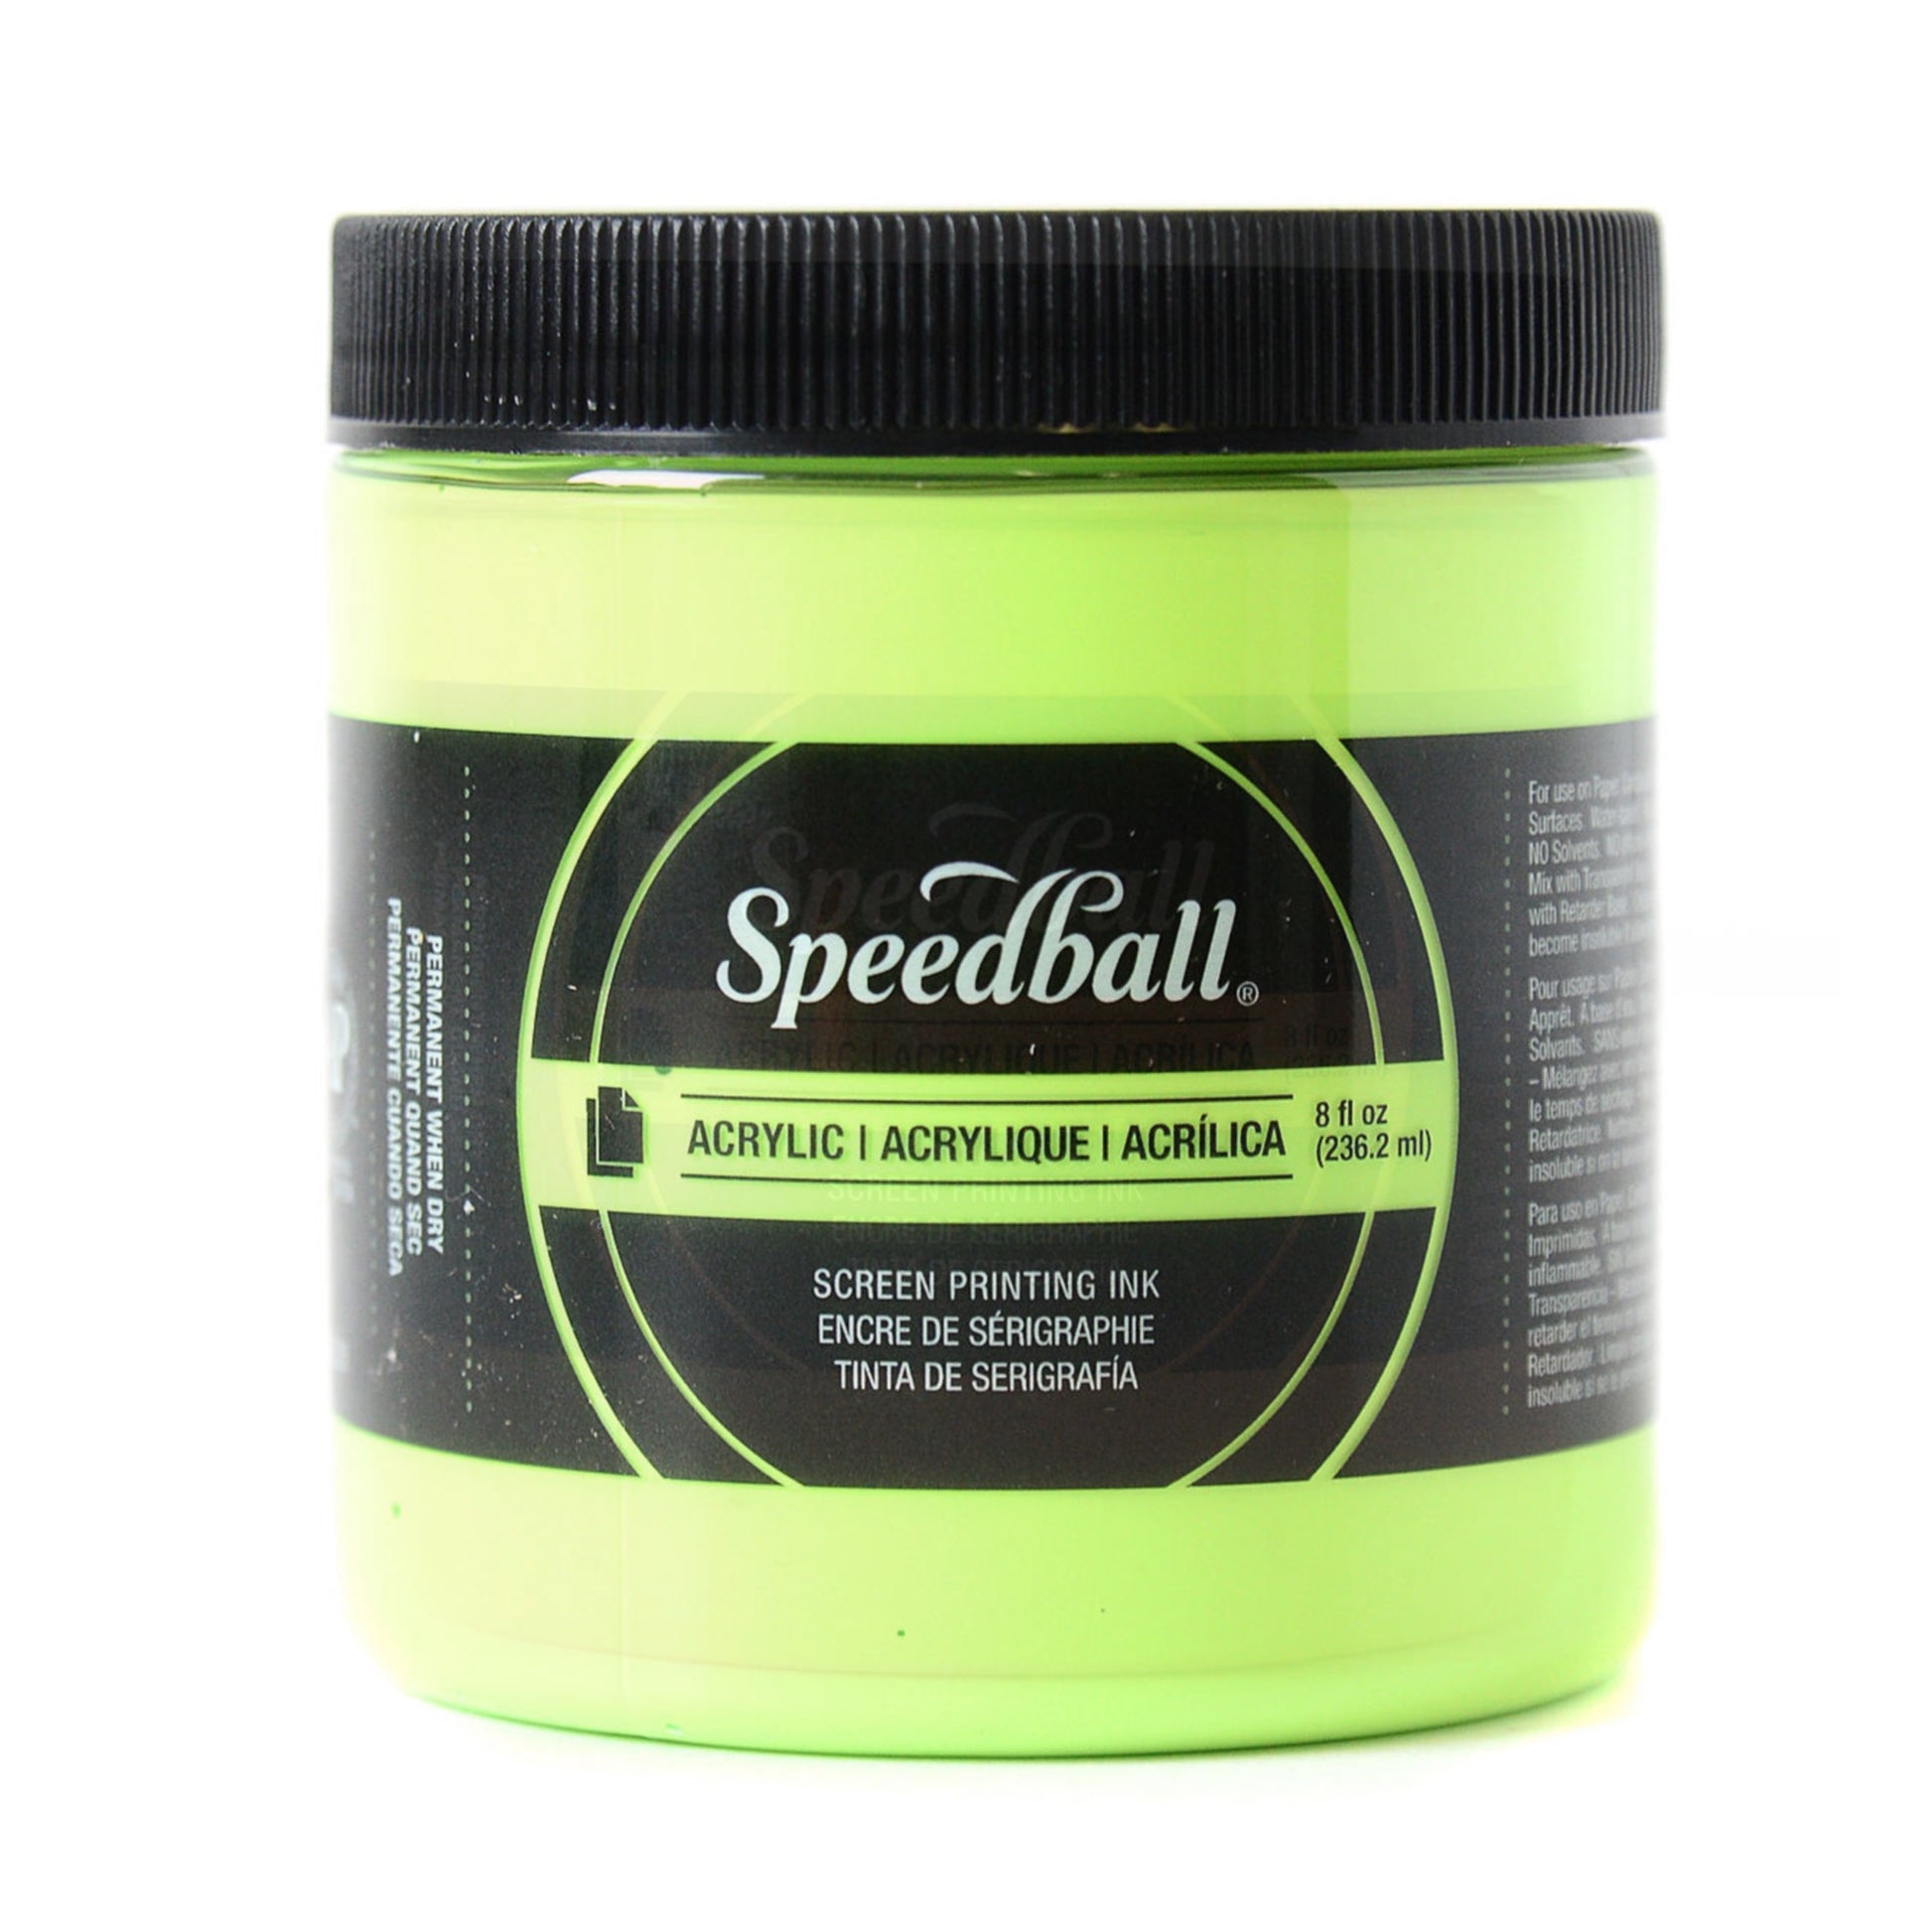 Speedball Acrylic Screen Printing Ink - 8 oz. - Fluorescent Lime Green by Speedball - K. A. Artist Shop